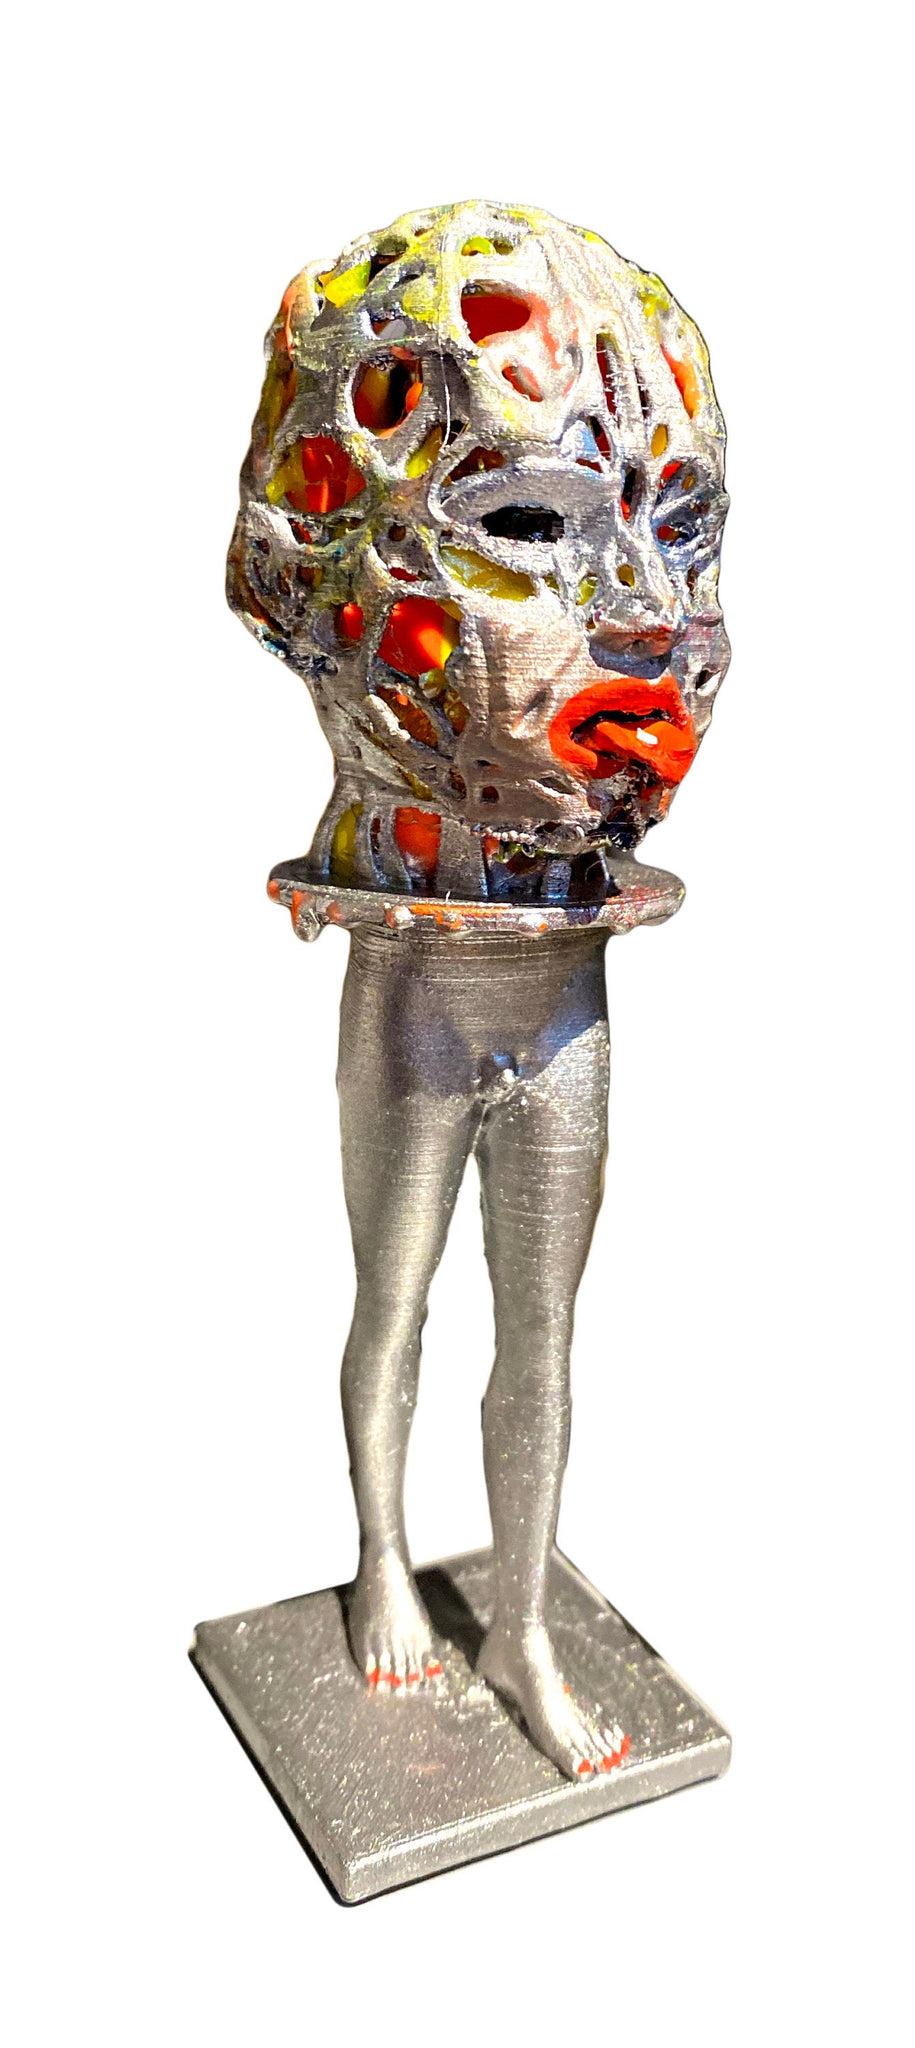 AEQEA human experience LSD acid man custom pla statue 3D mashup art toy figure